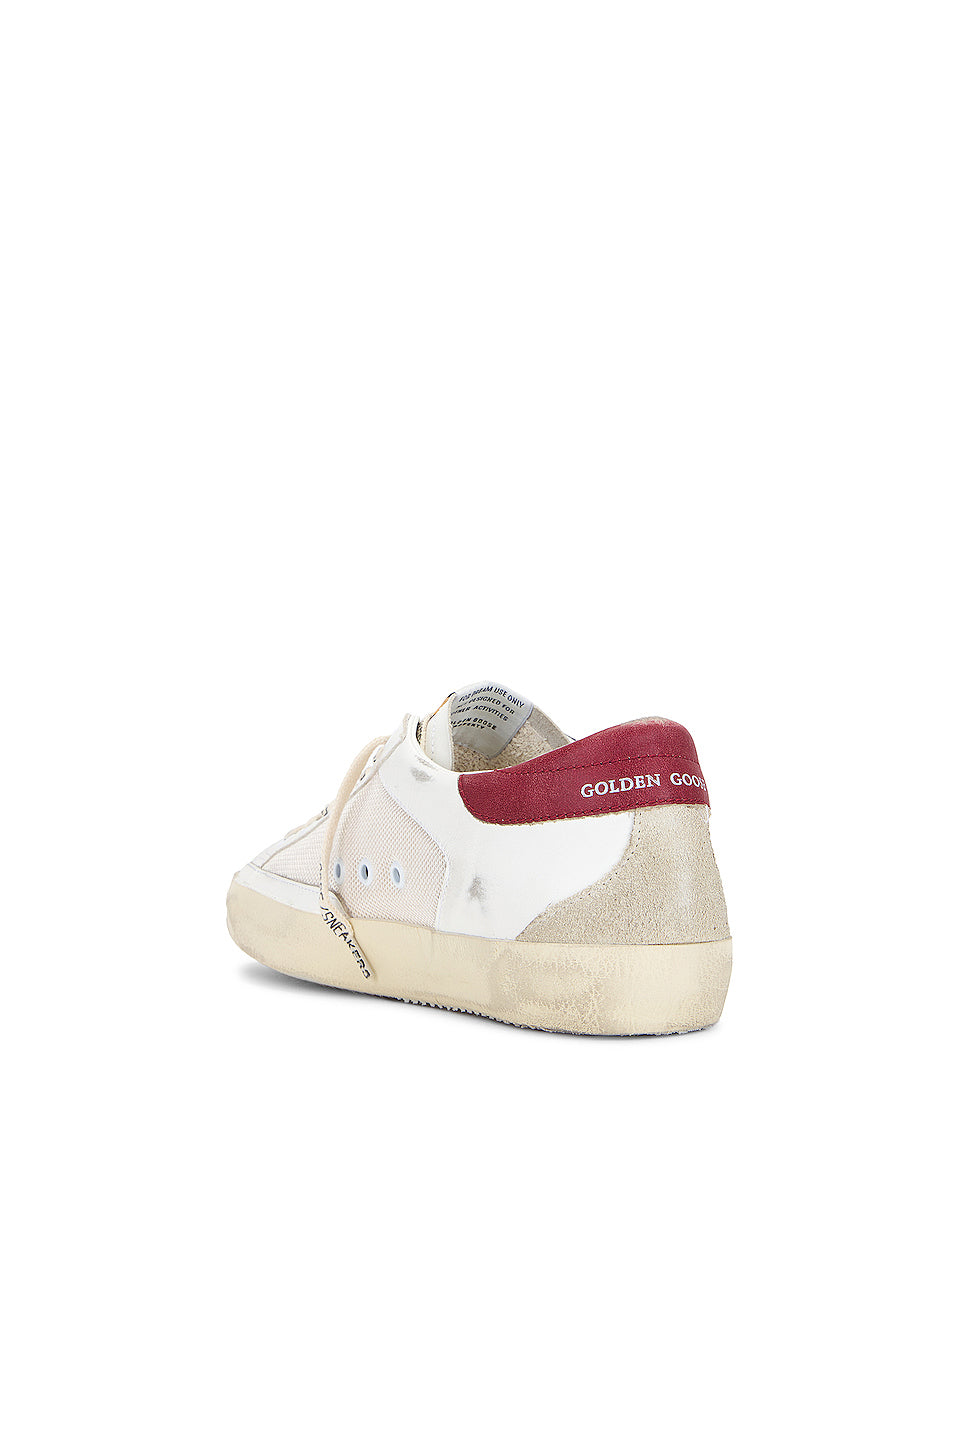 Super Star Sneaker In Cream, Red, White & Beige